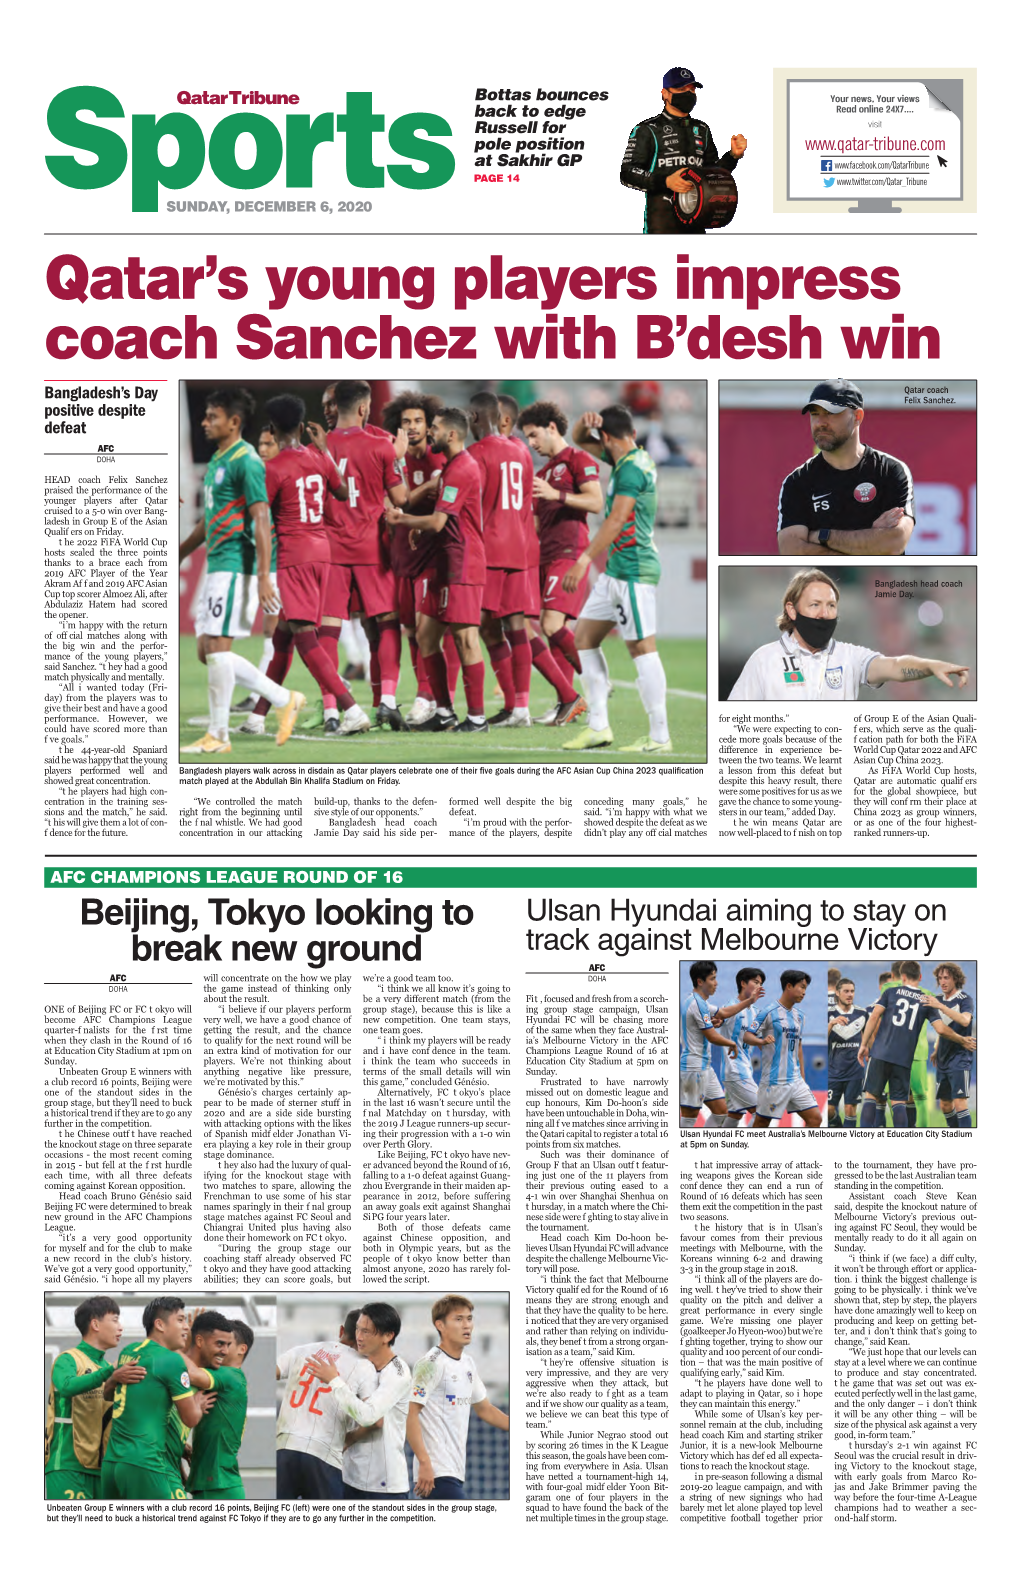 Qatar's Young Players Impress Coach Sanchez with B'desh